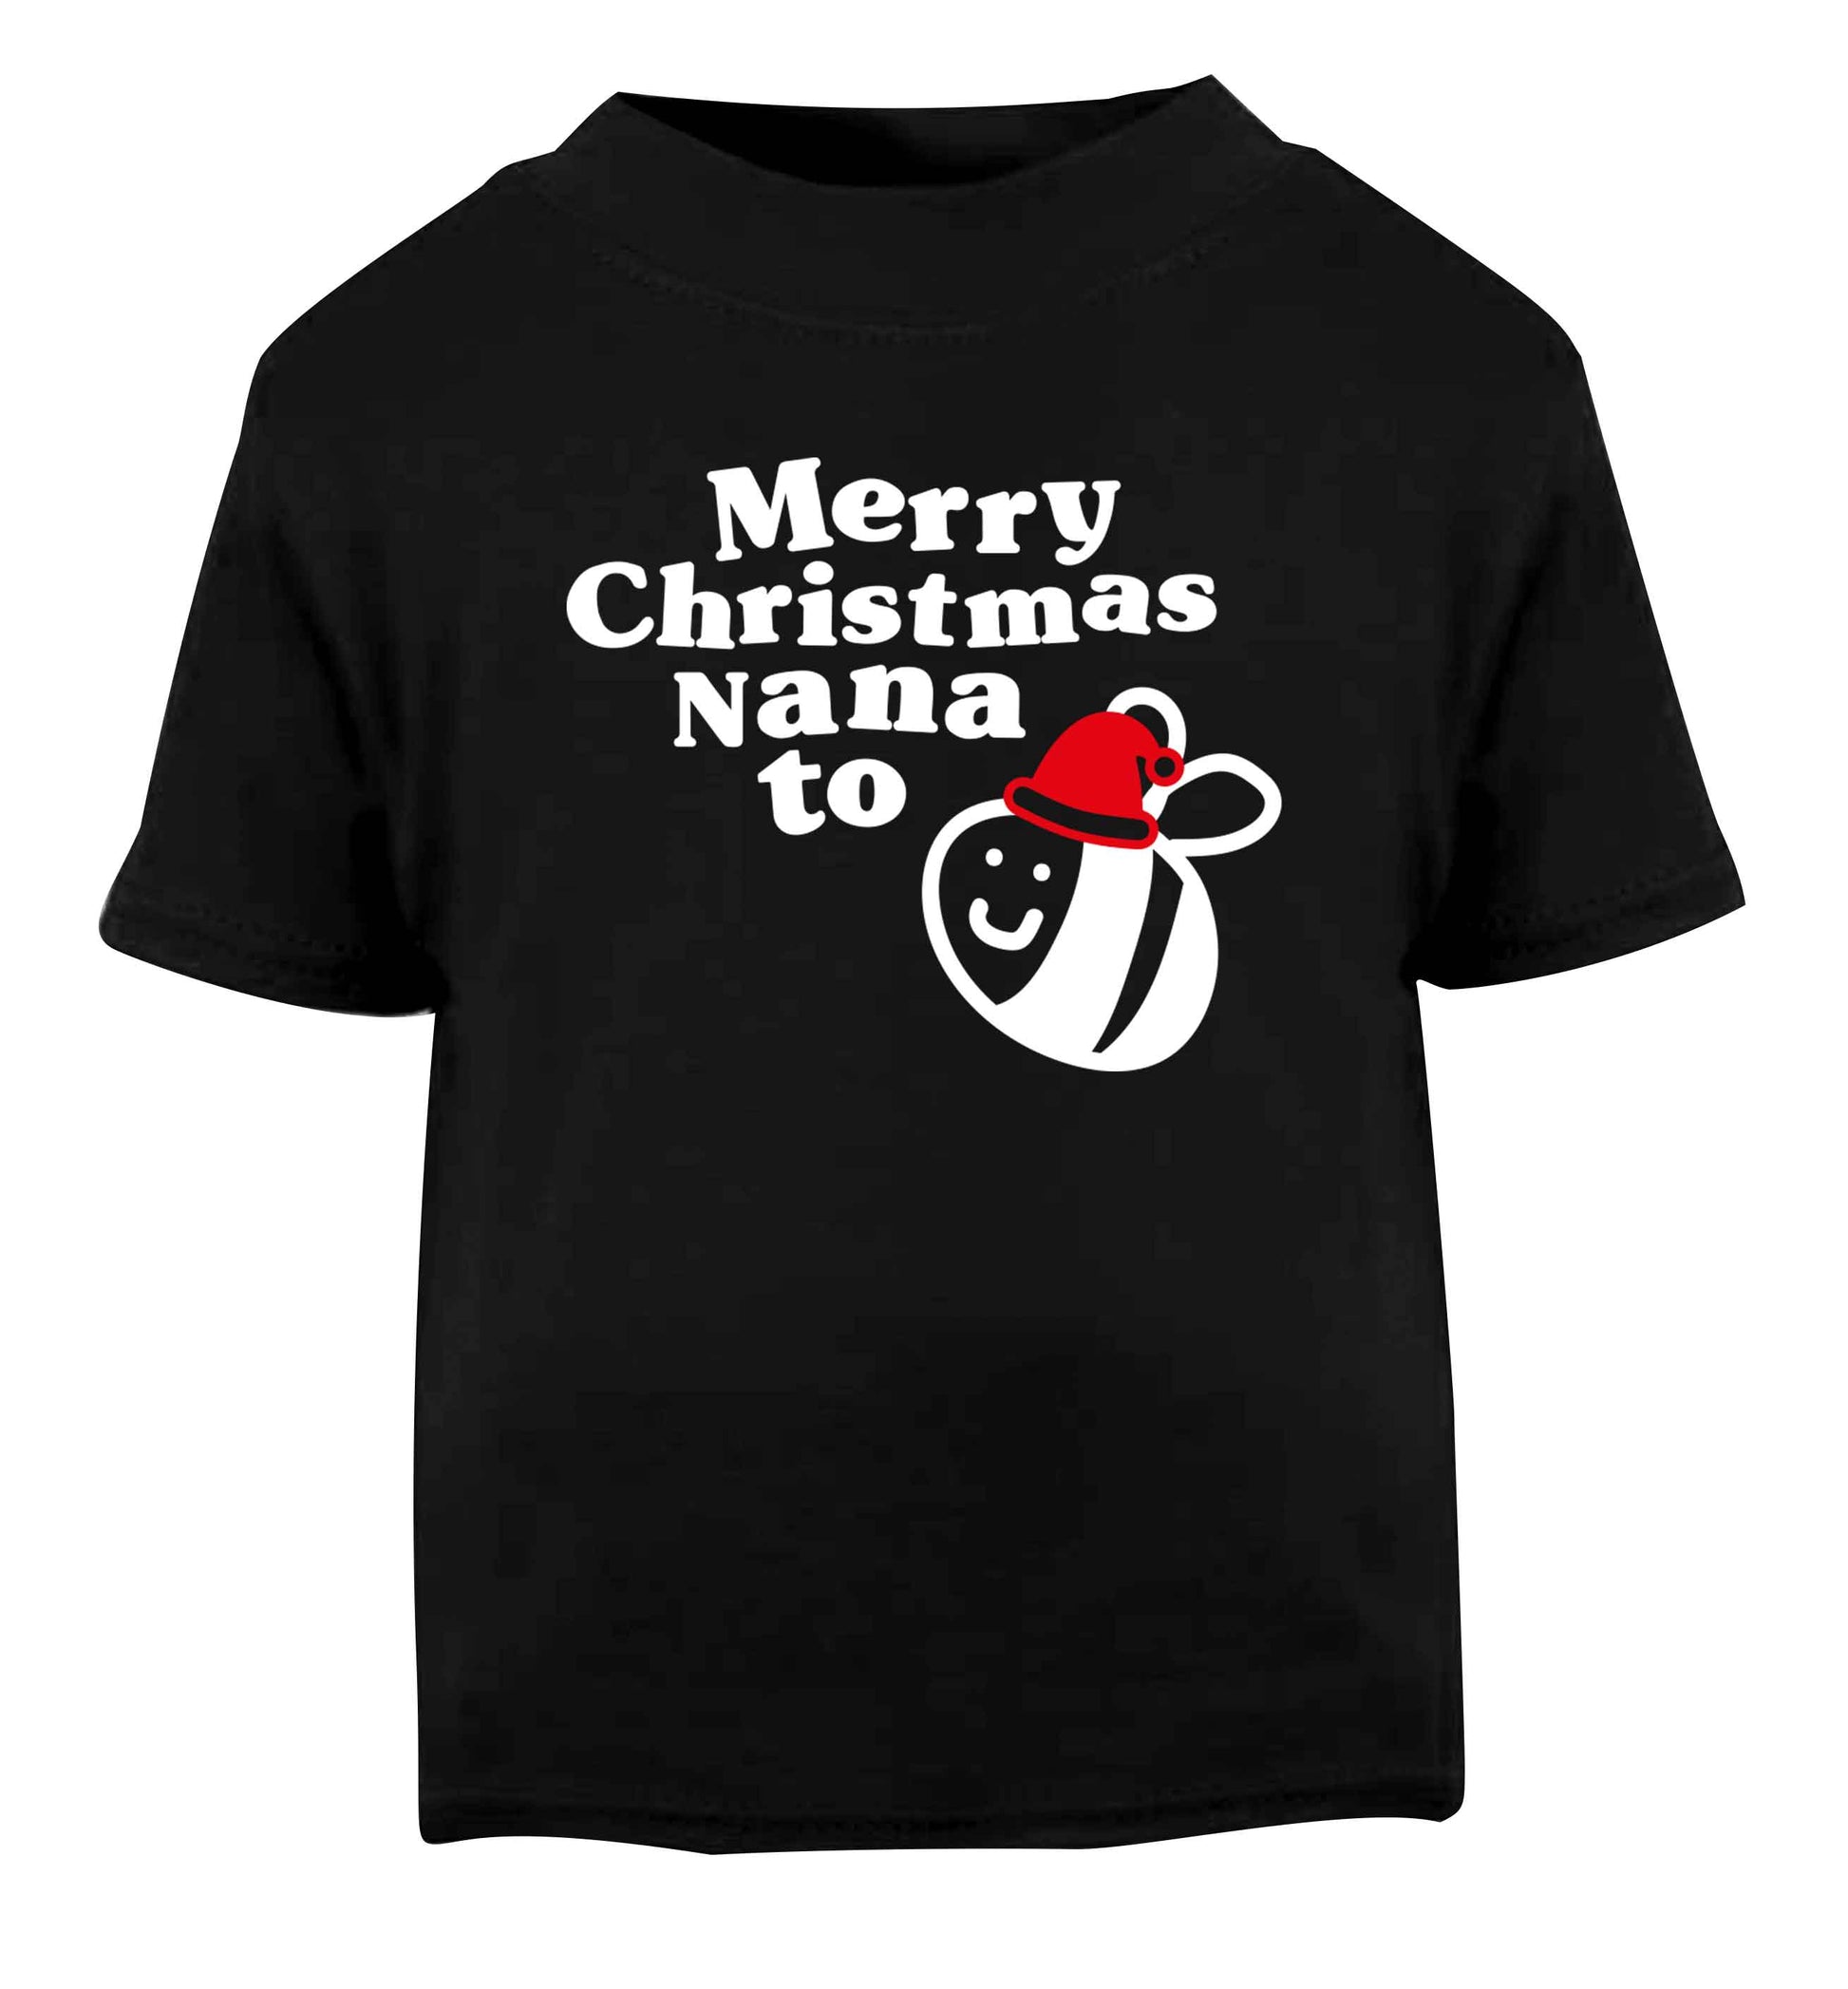 Merry Christmas nana to be Black Baby Toddler Tshirt 2 years